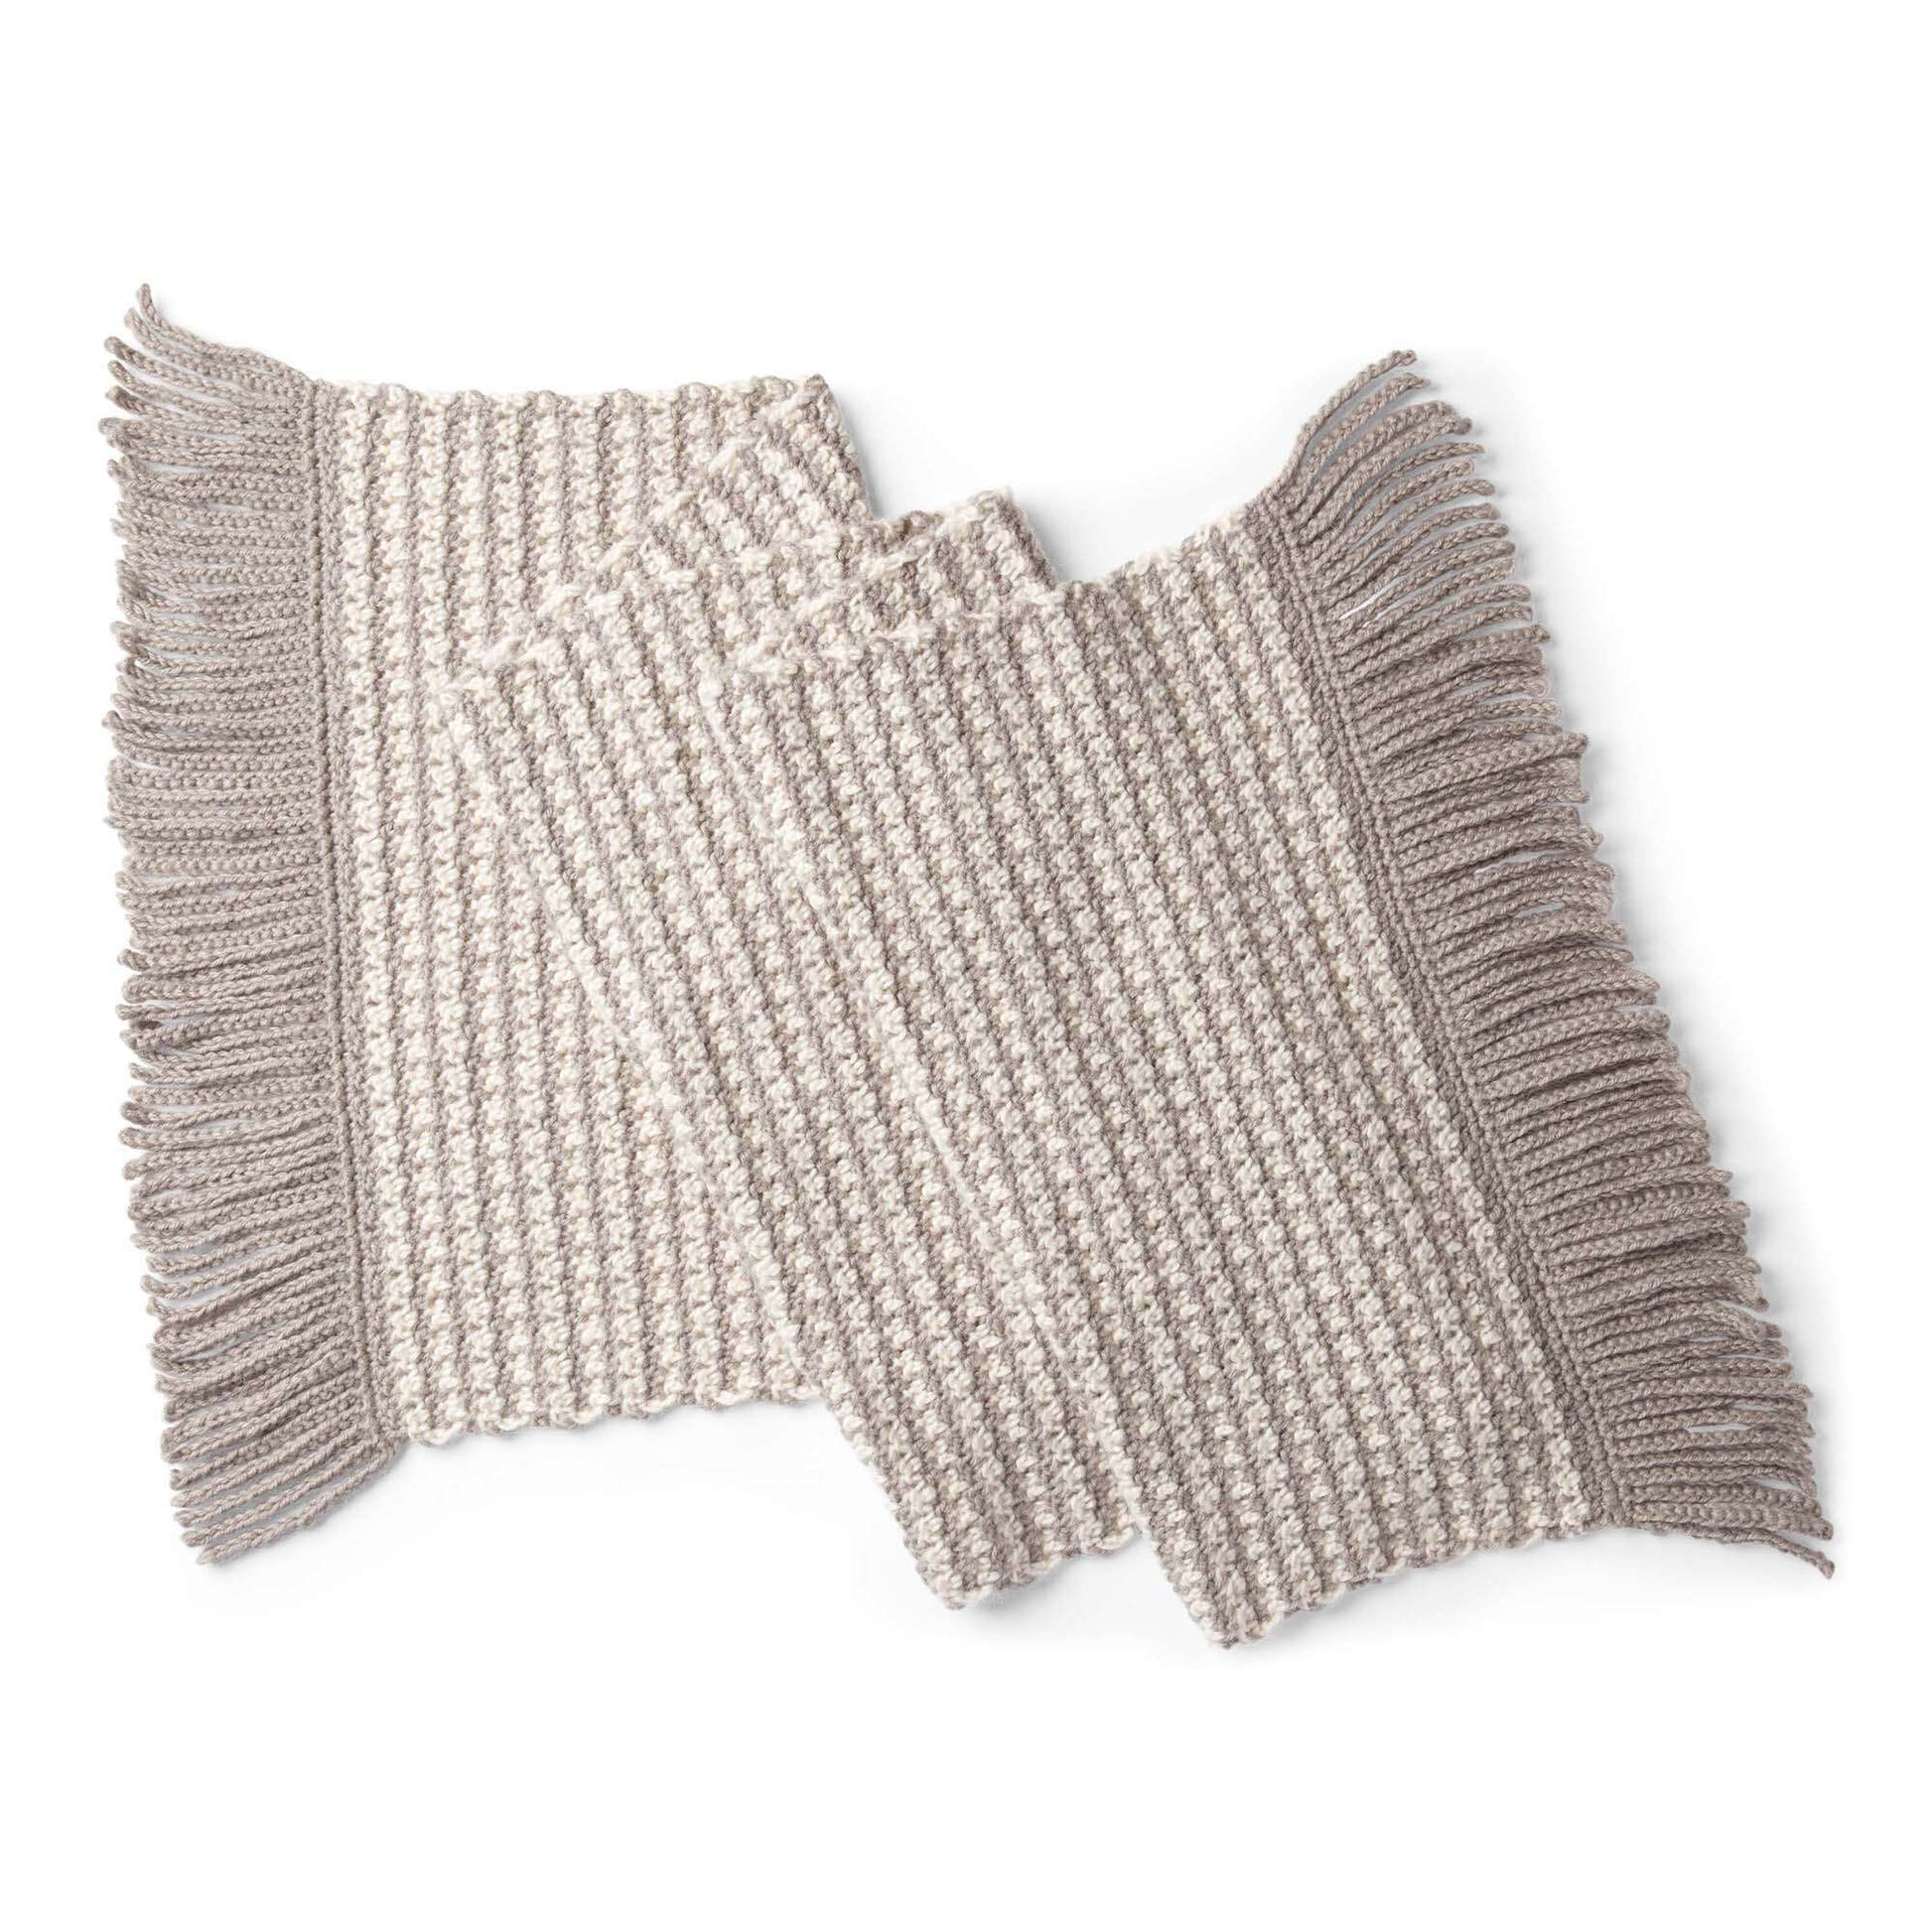 Free Patons Tweed Crochet Shawl Pattern